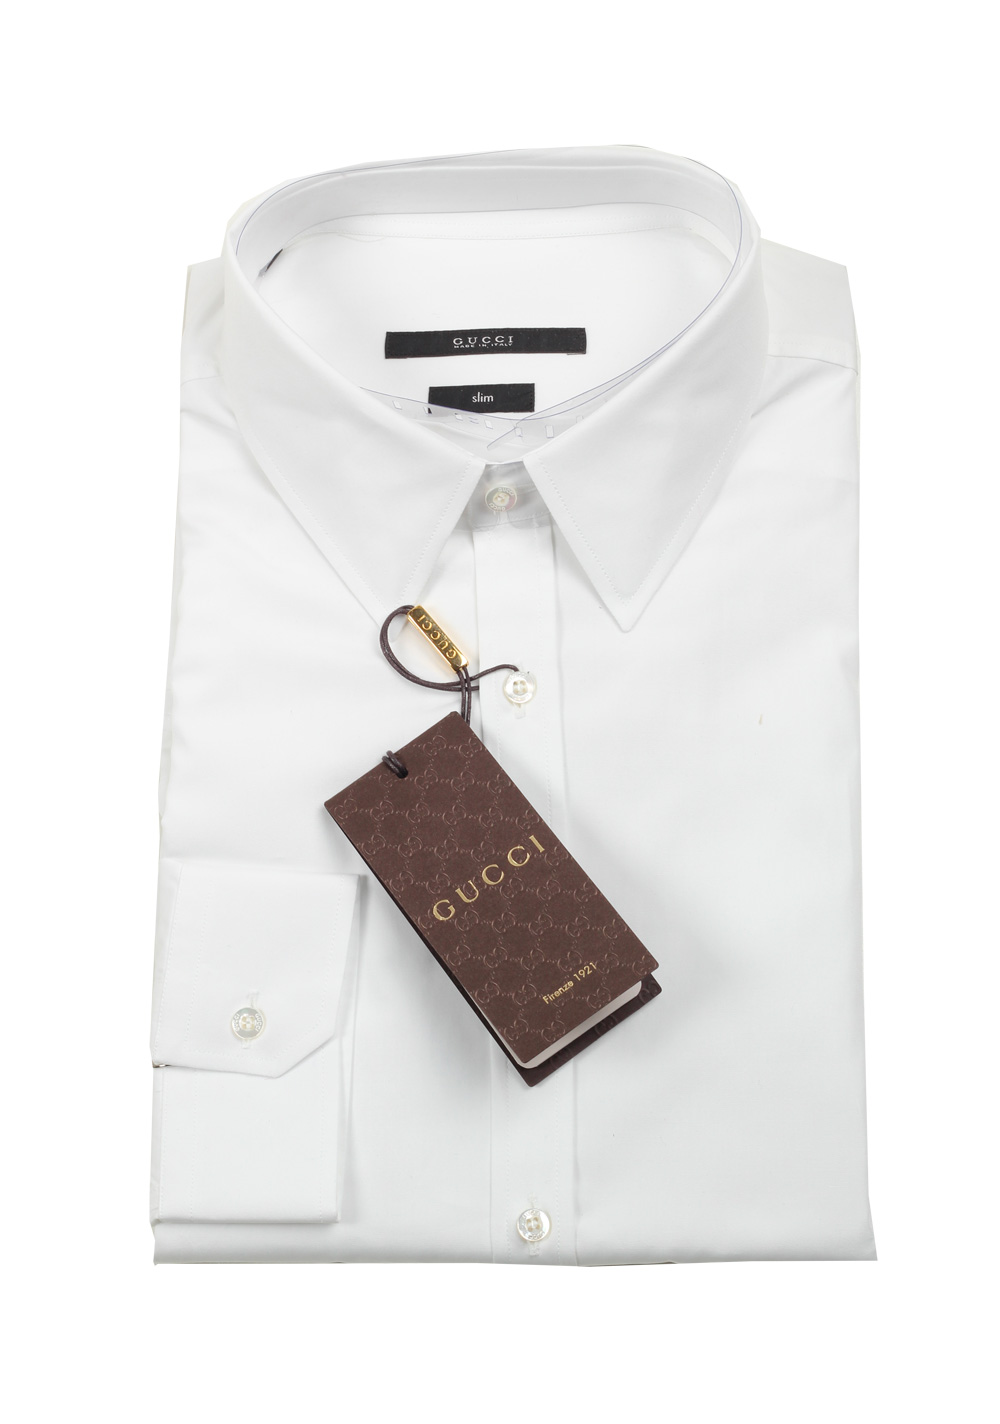 Gucci Solid White Dress Shirt Size 43 